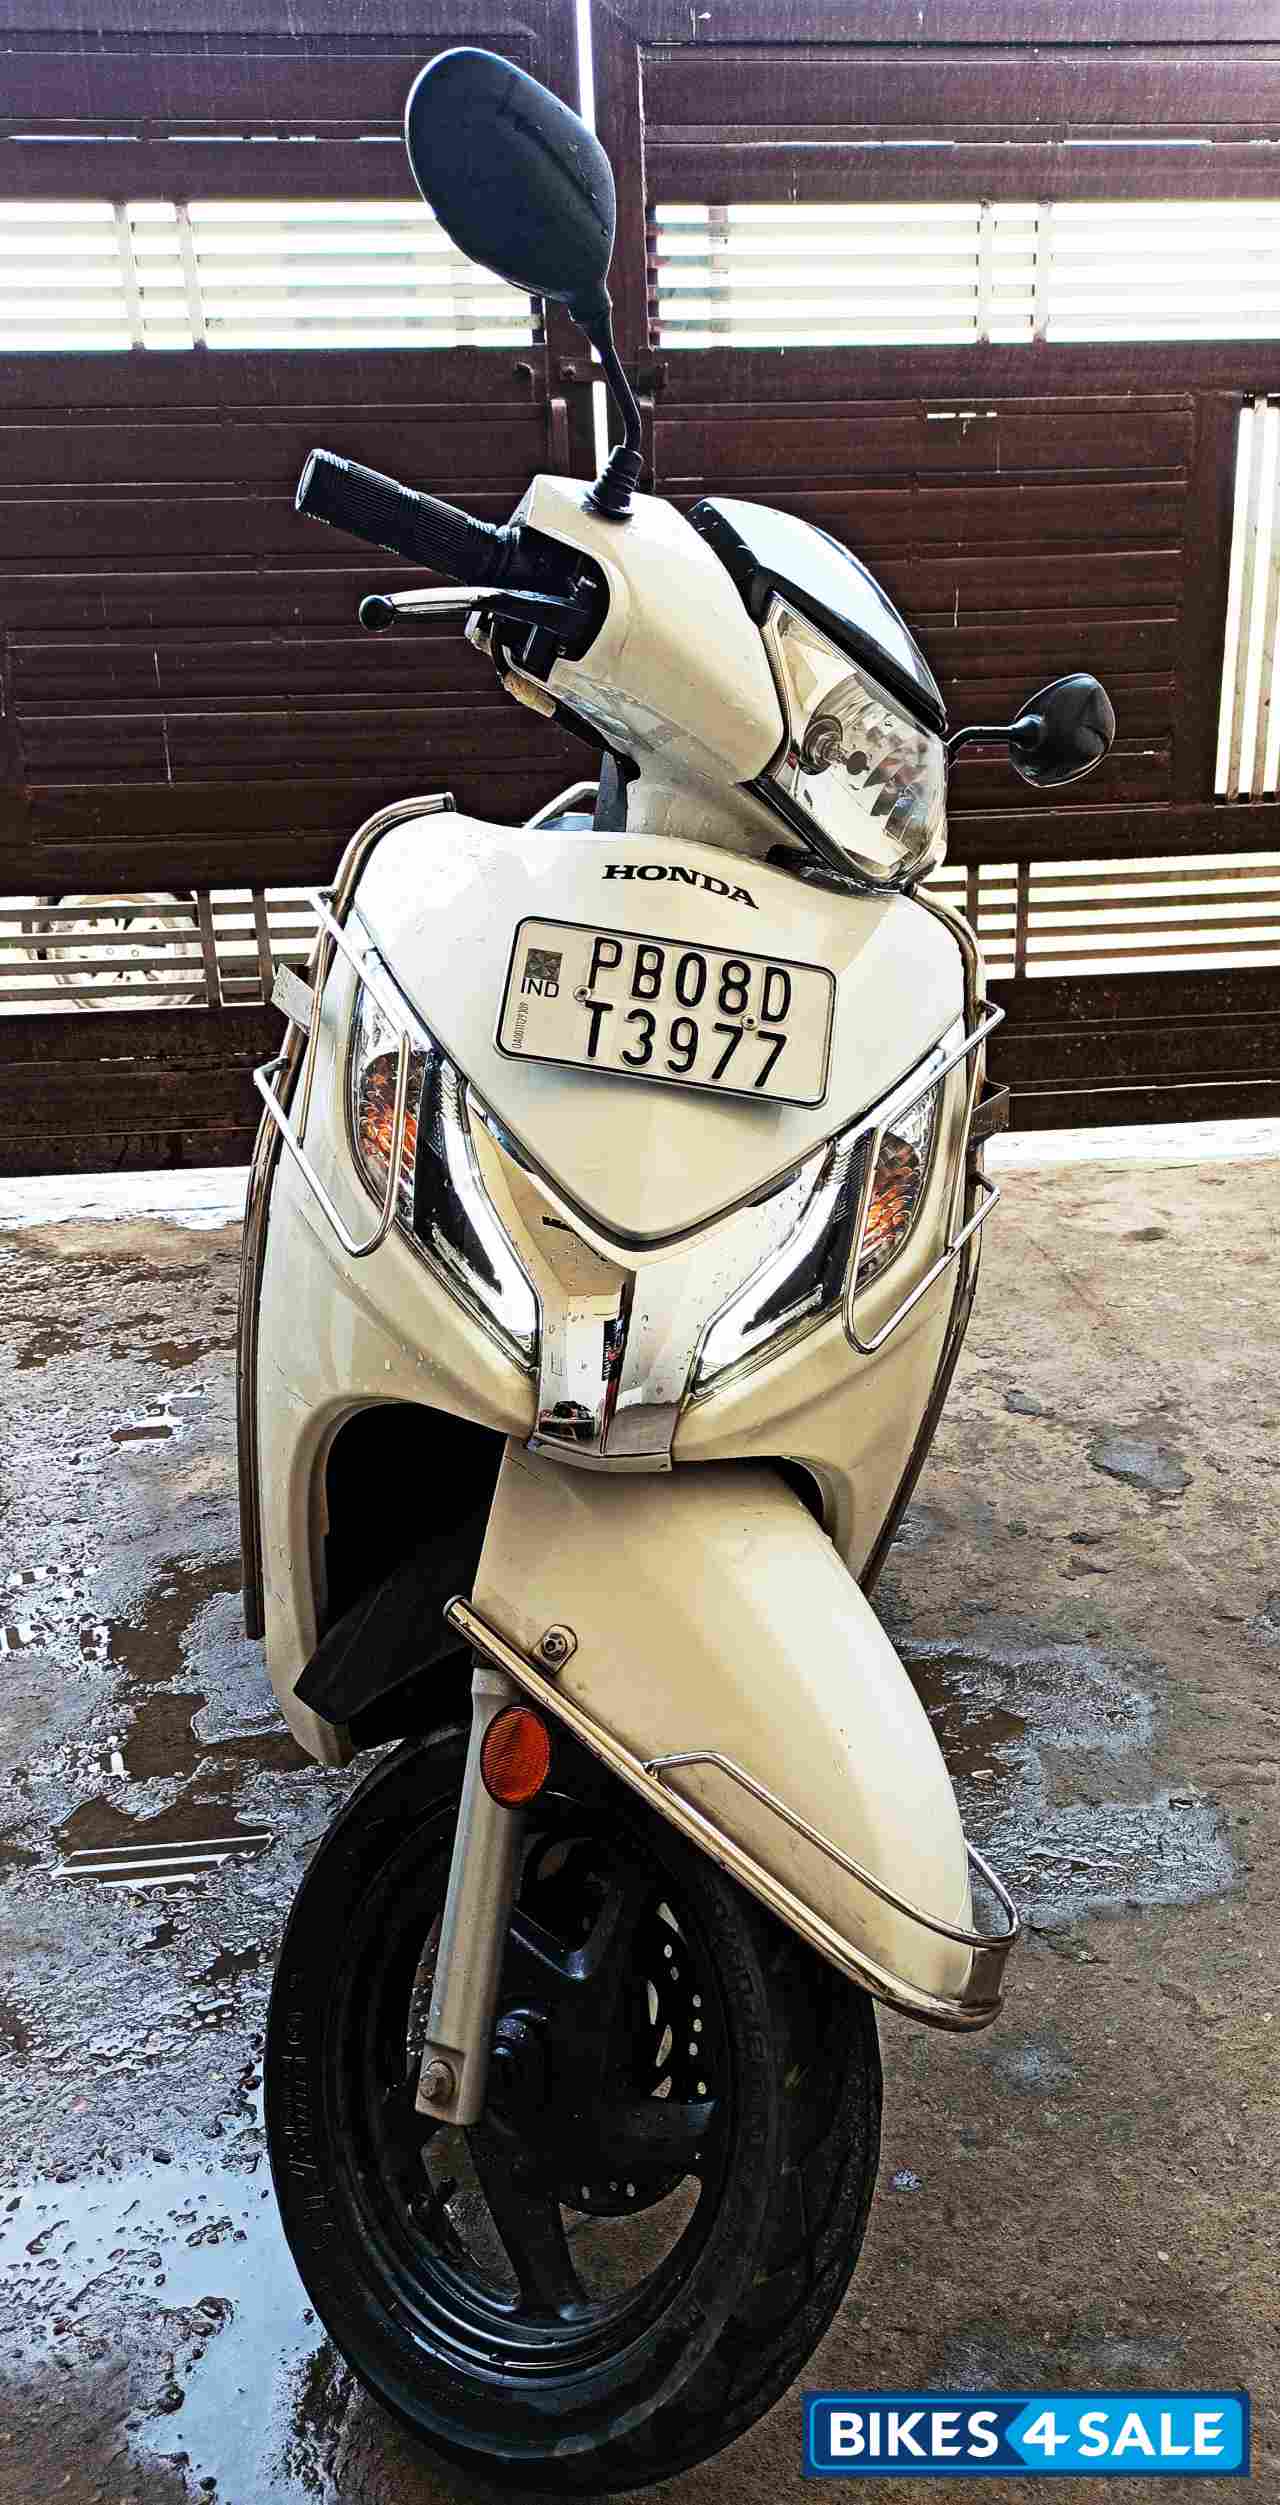 Used 2017 model Honda Activa 125 for sale in Jalandhar. ID 327762 